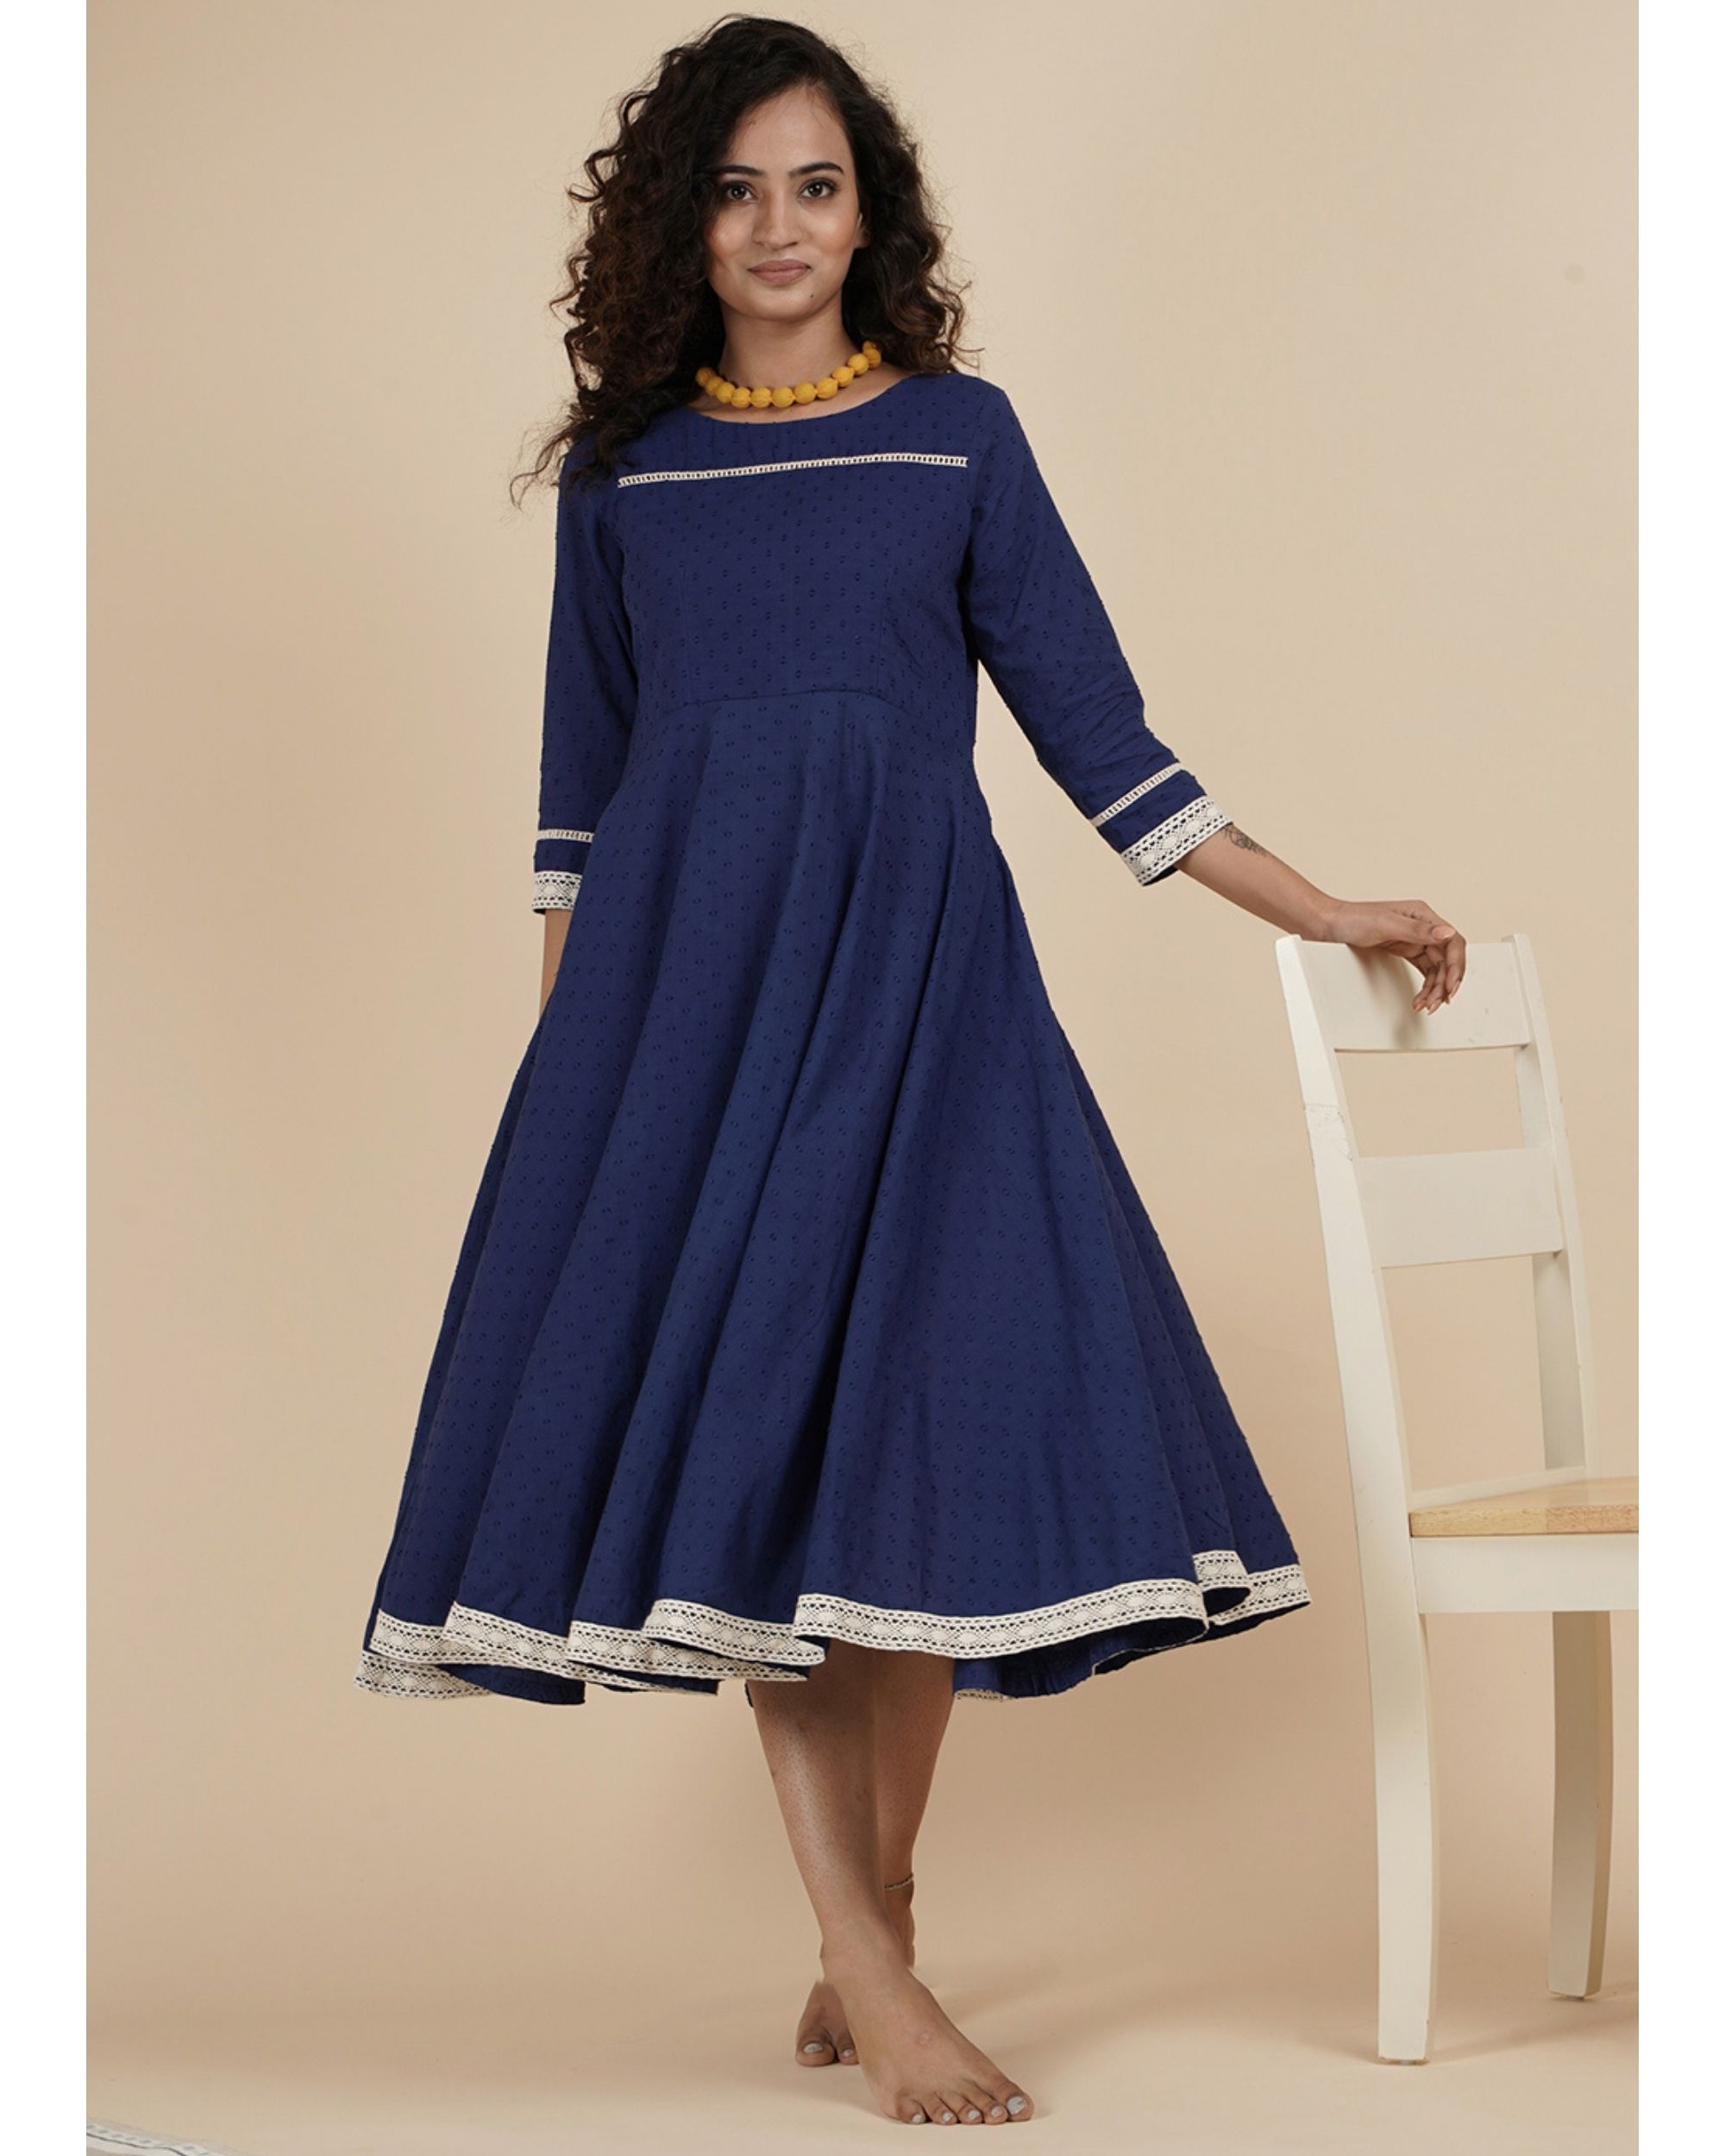 Royal blue border detailed dress